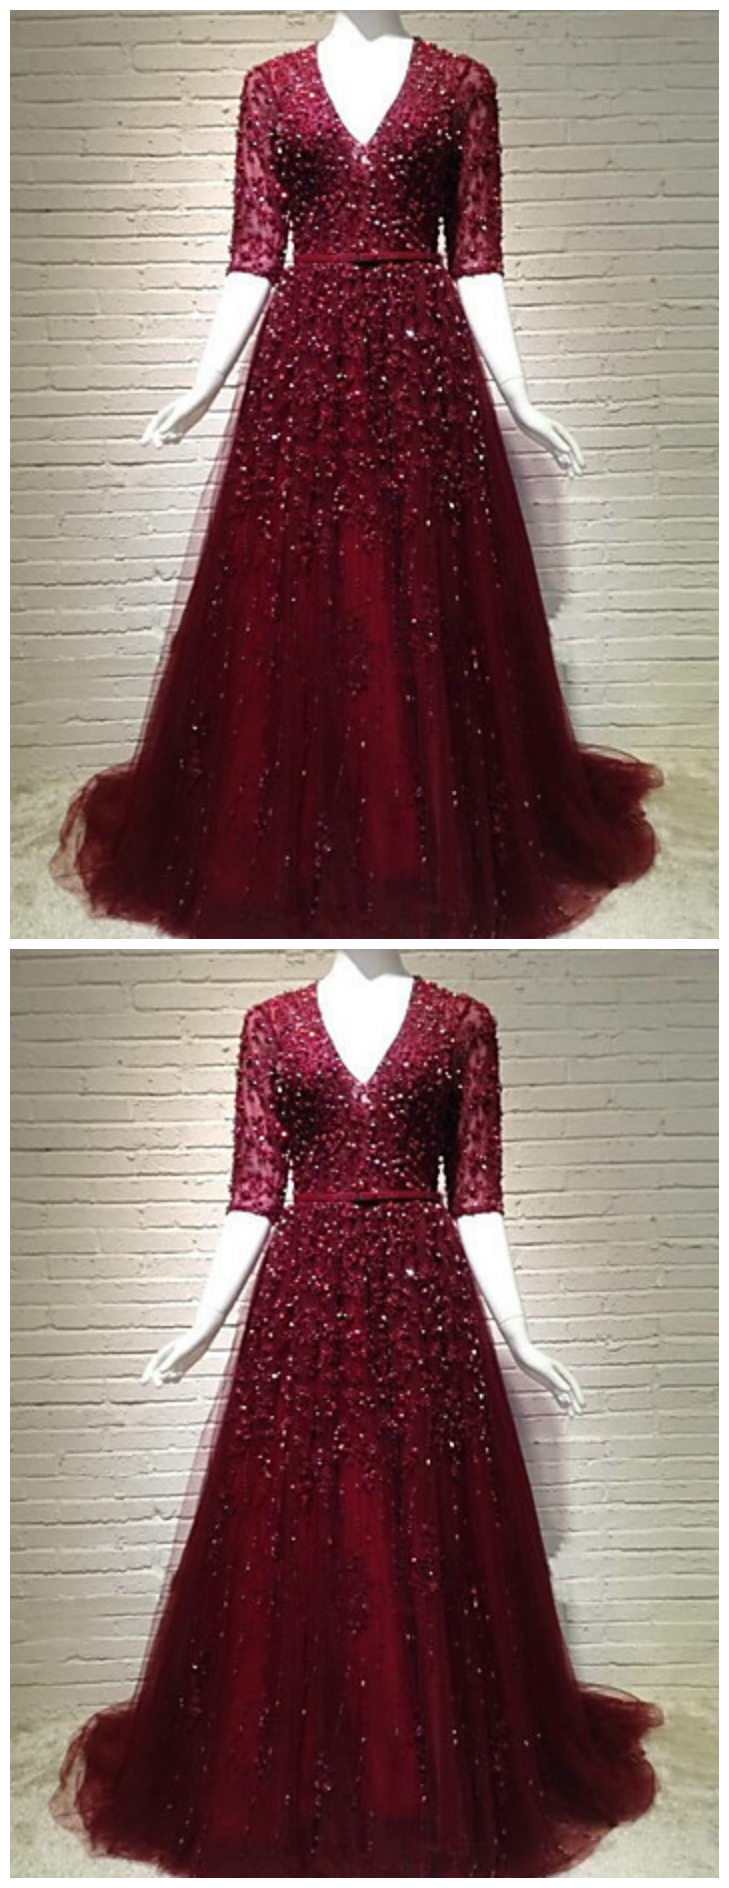 Burgundy Prom Dress, Sparkly Prom Dress, Beaded Prom Dress, Elegant Prom Dress, V Neck Prom Dress